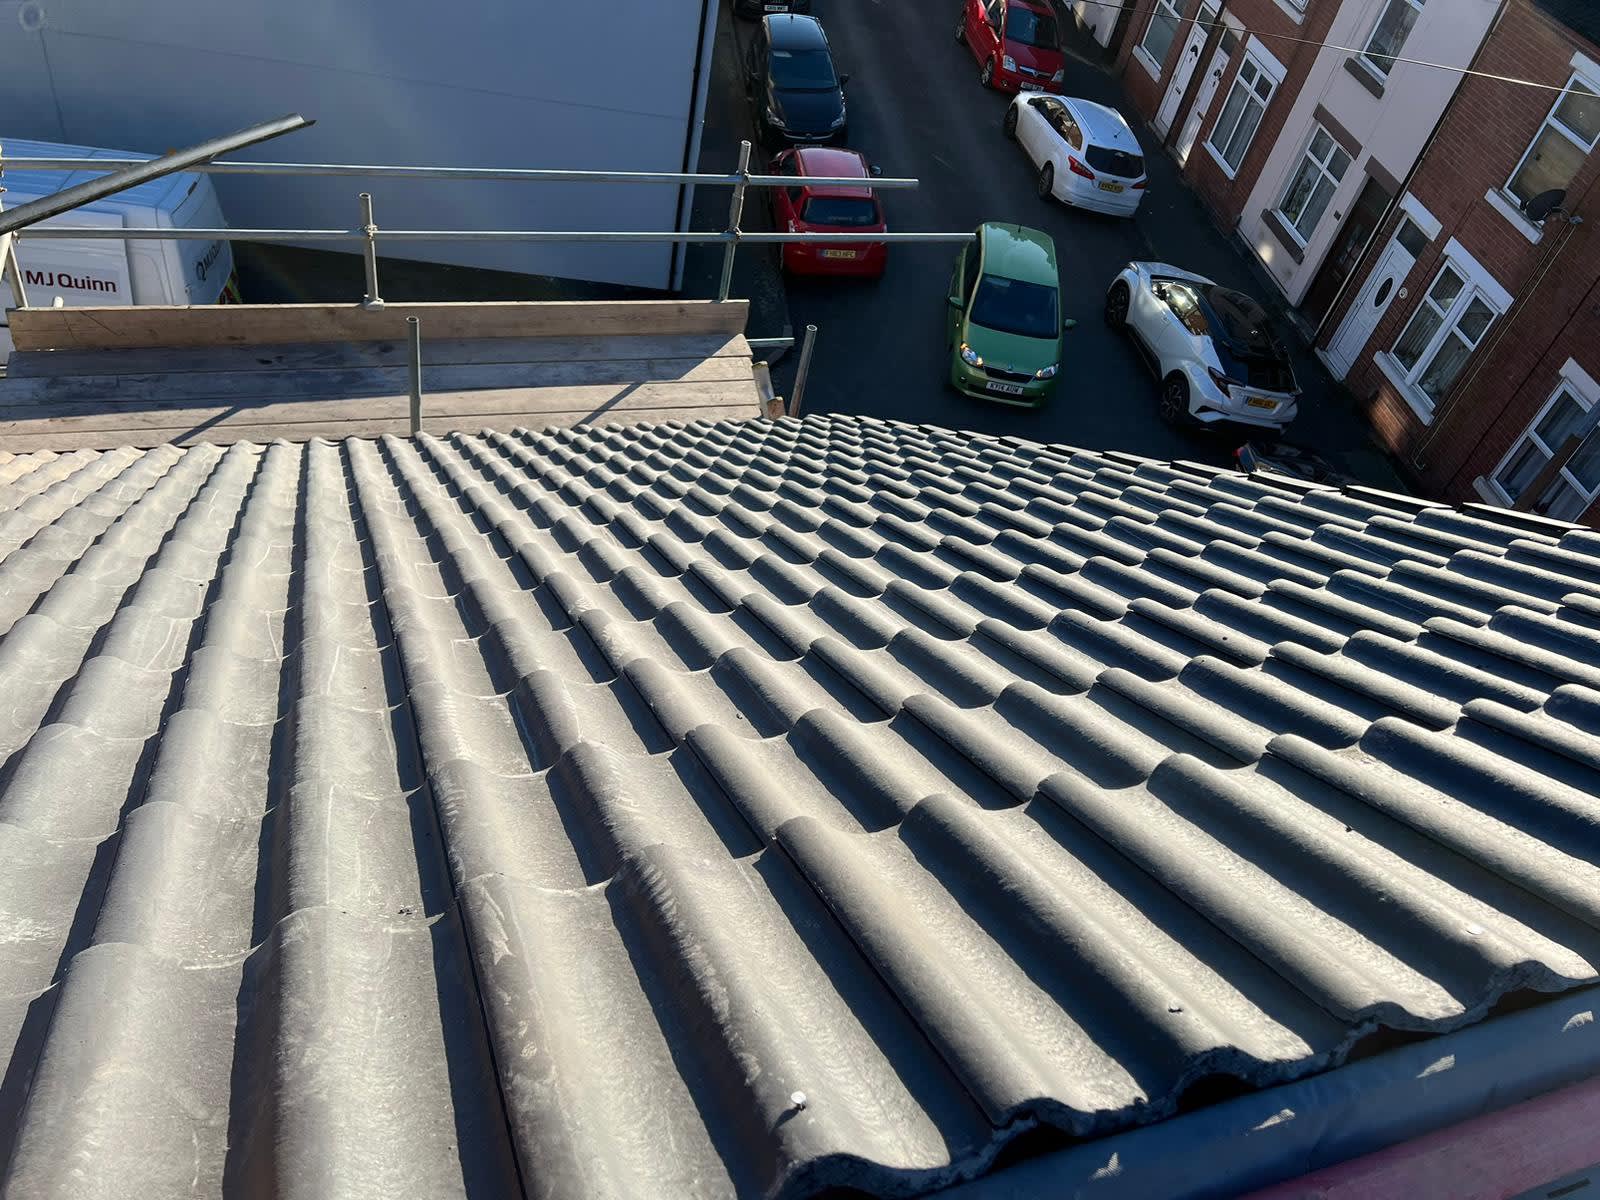 Images Clean Slate Roofing Ltd